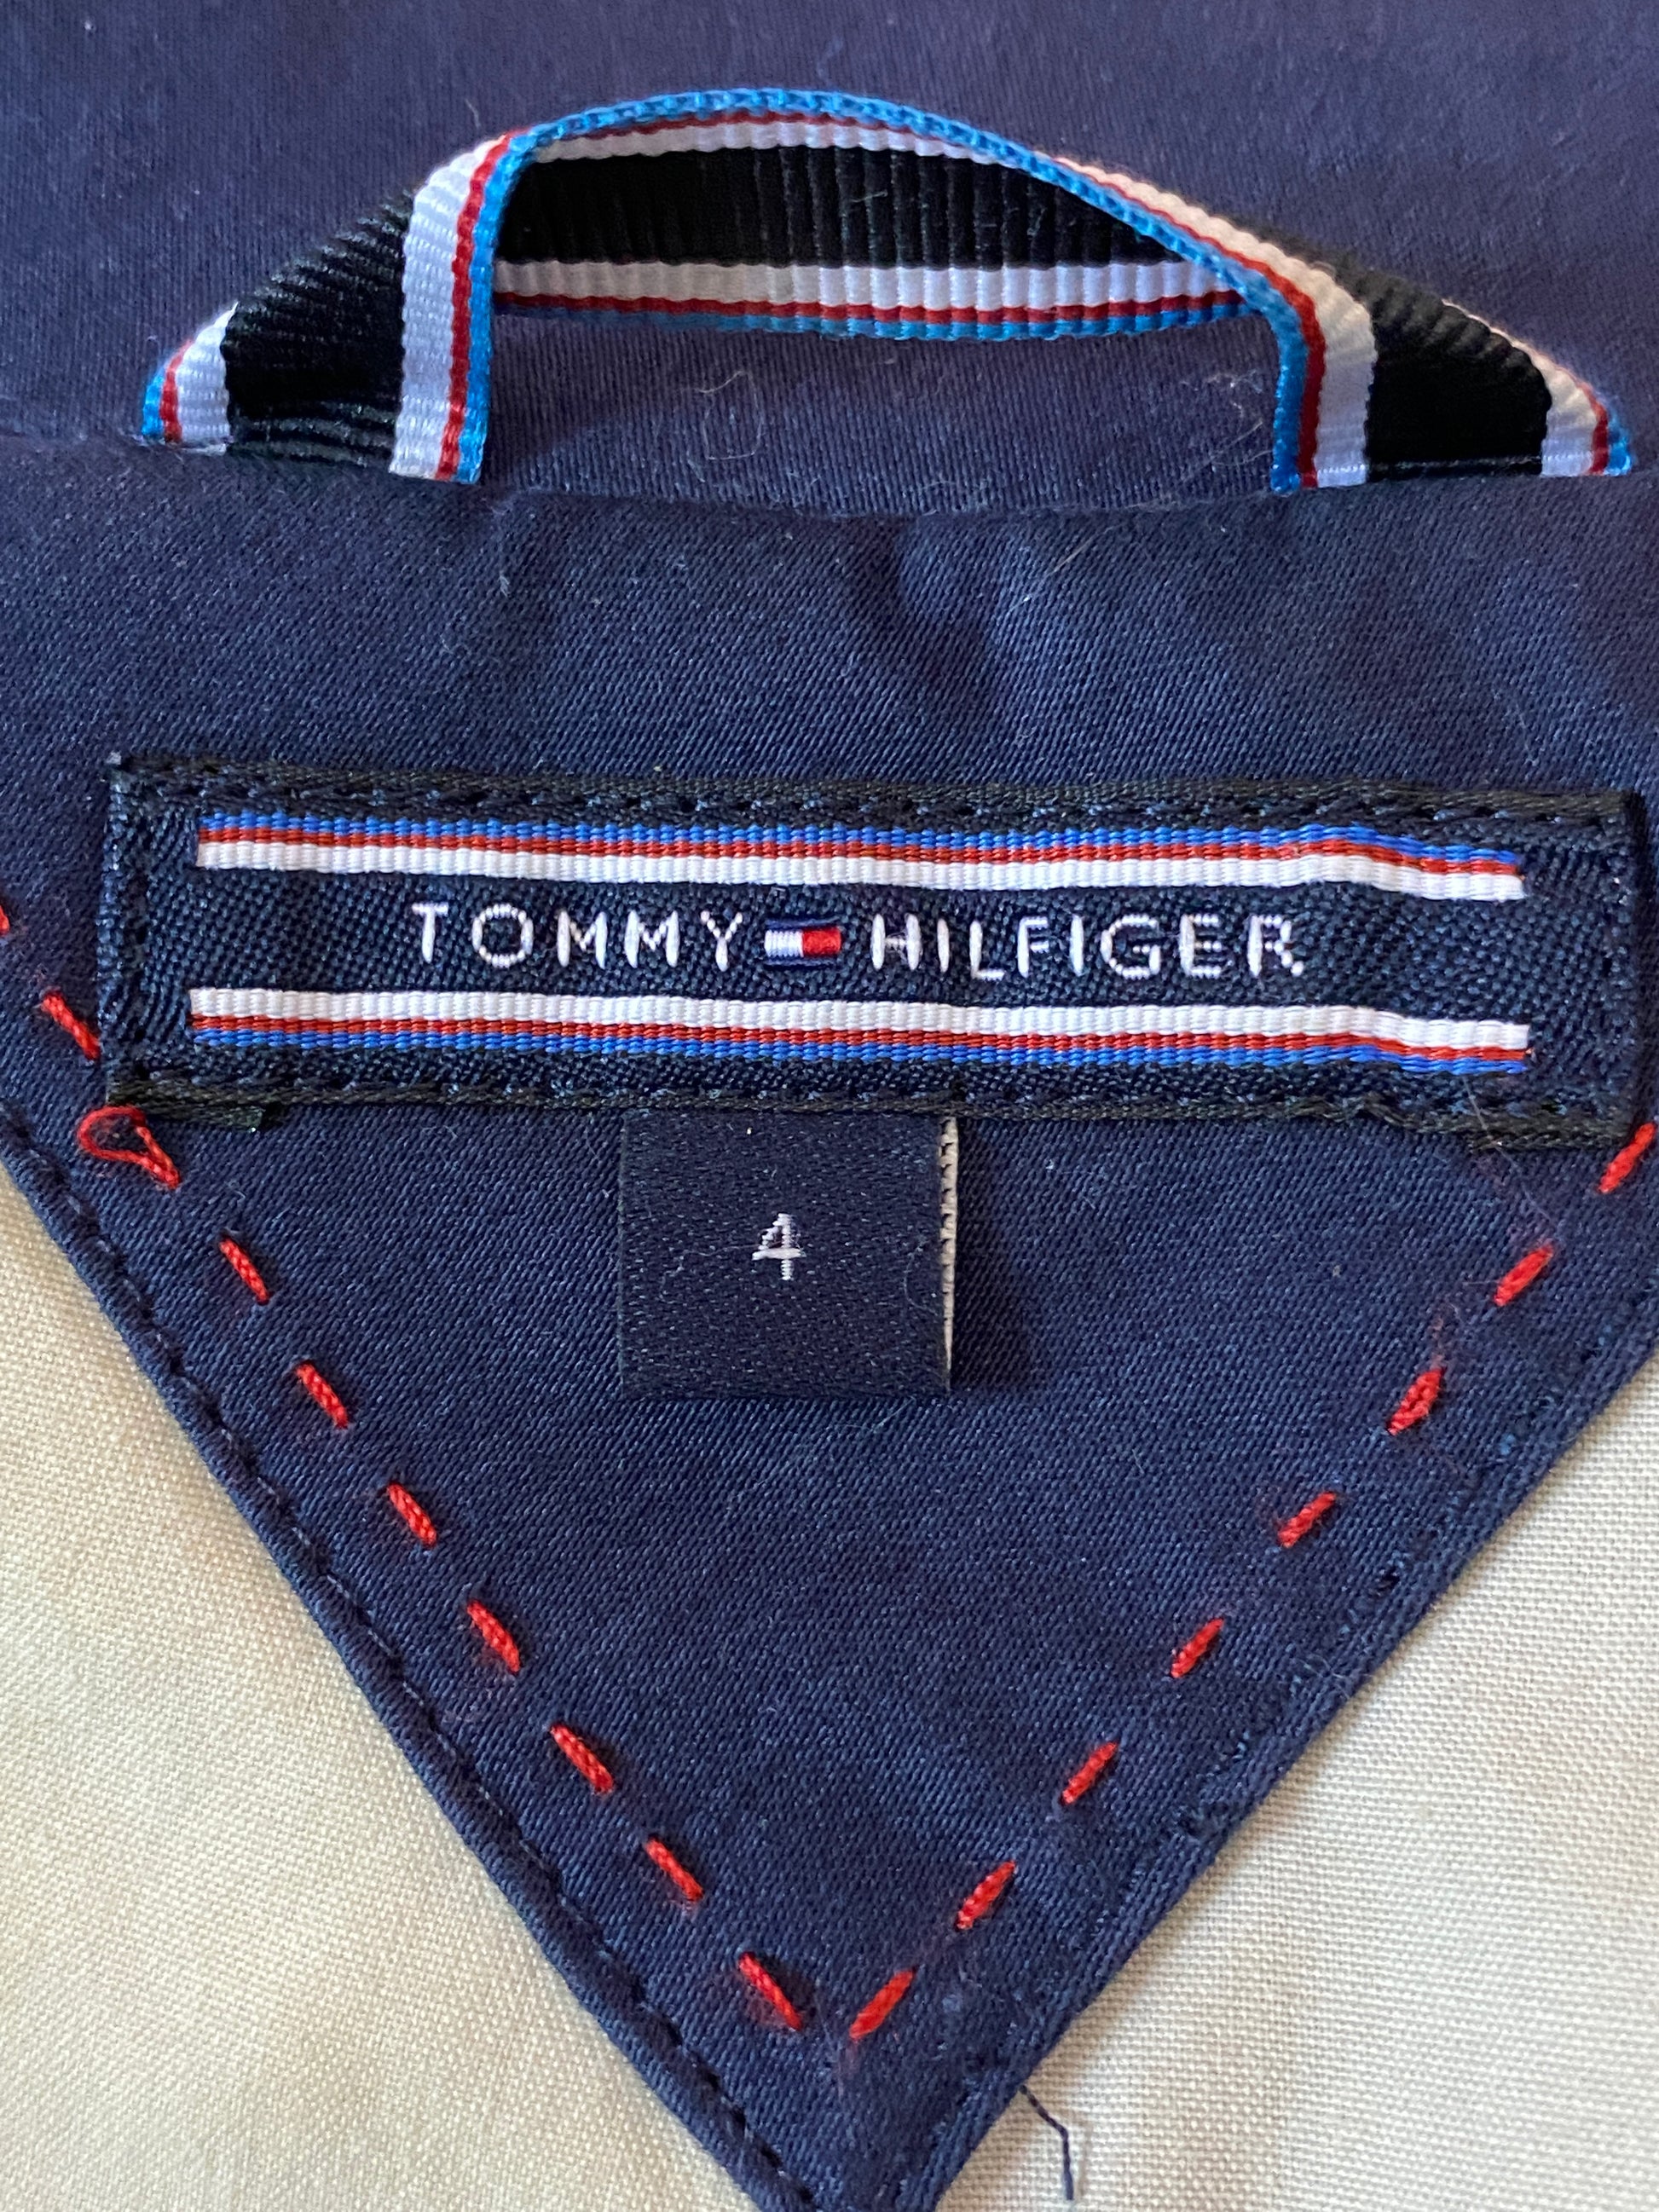 Tommy Hilfiger Vintage Women's Suit Blazer - Small Navy Blue Cotton Blend